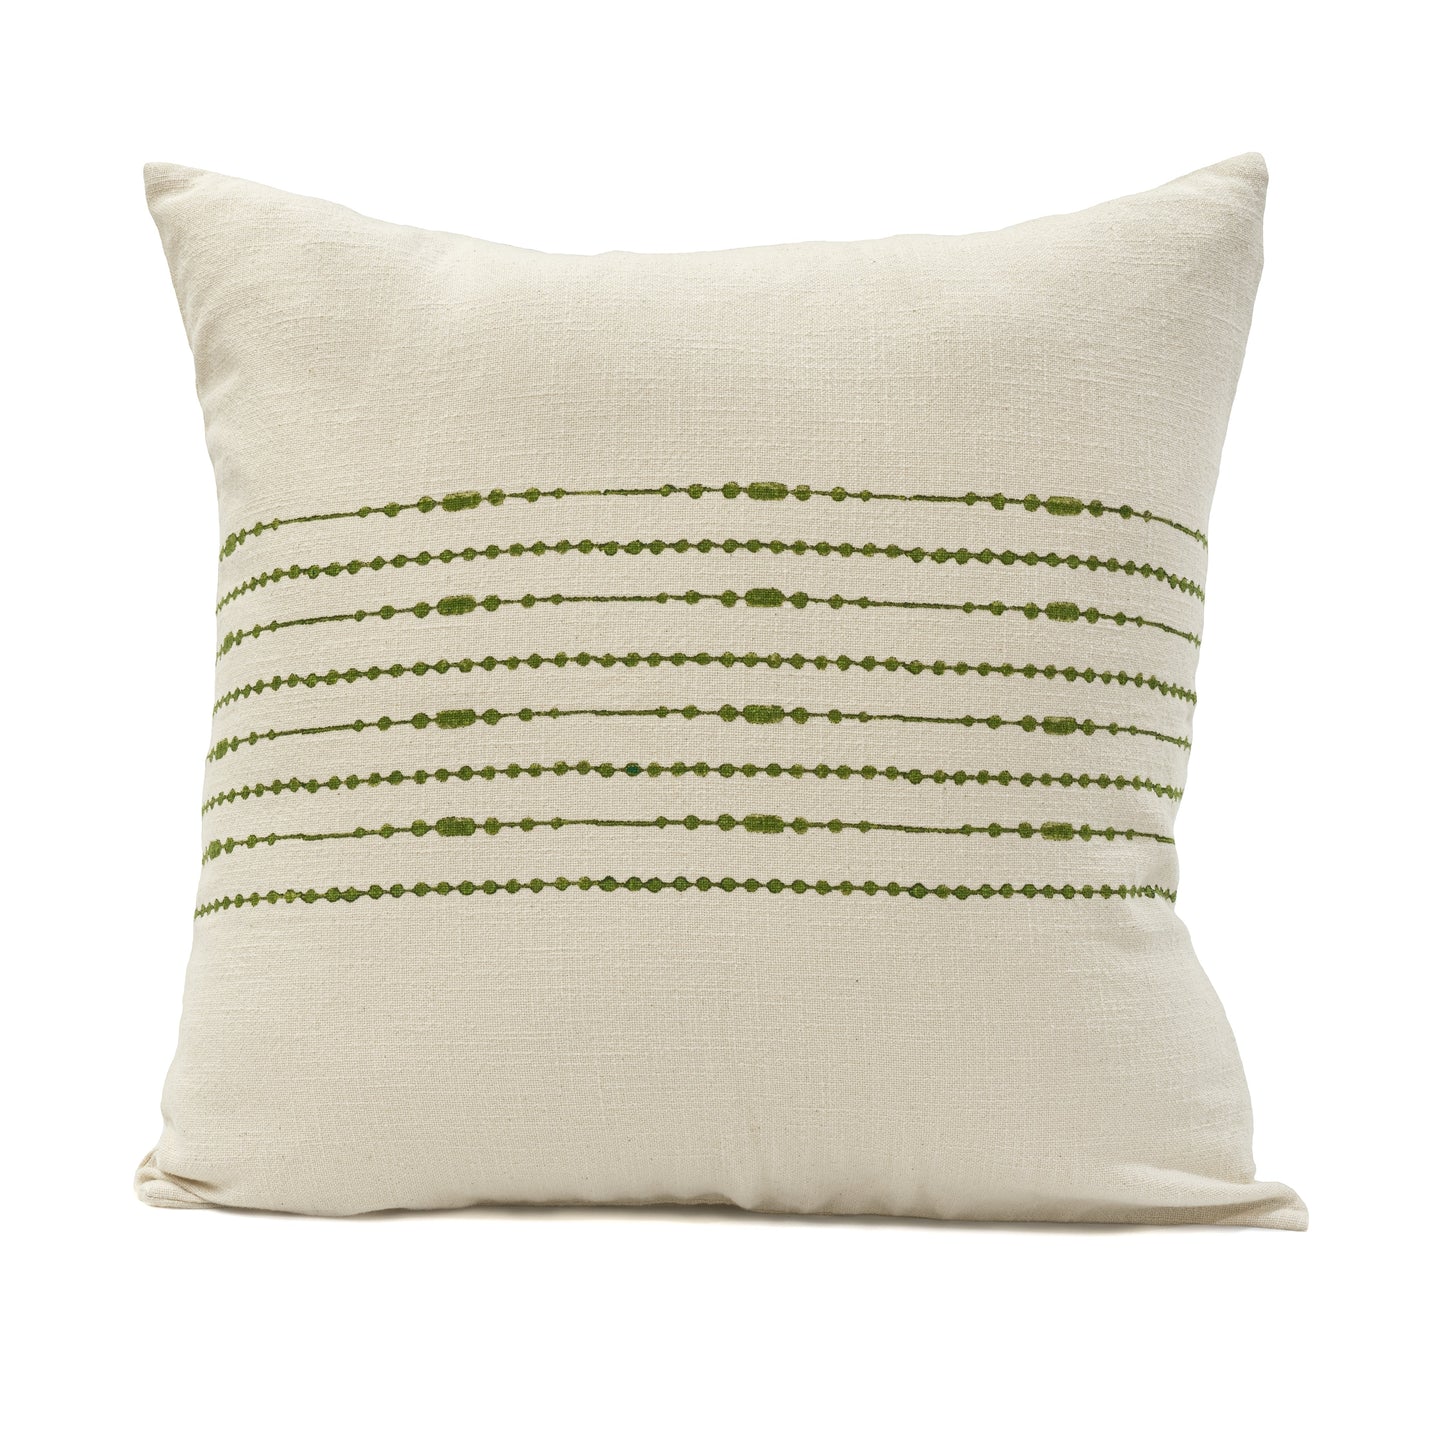 Hand block printed green cotton cushion cover